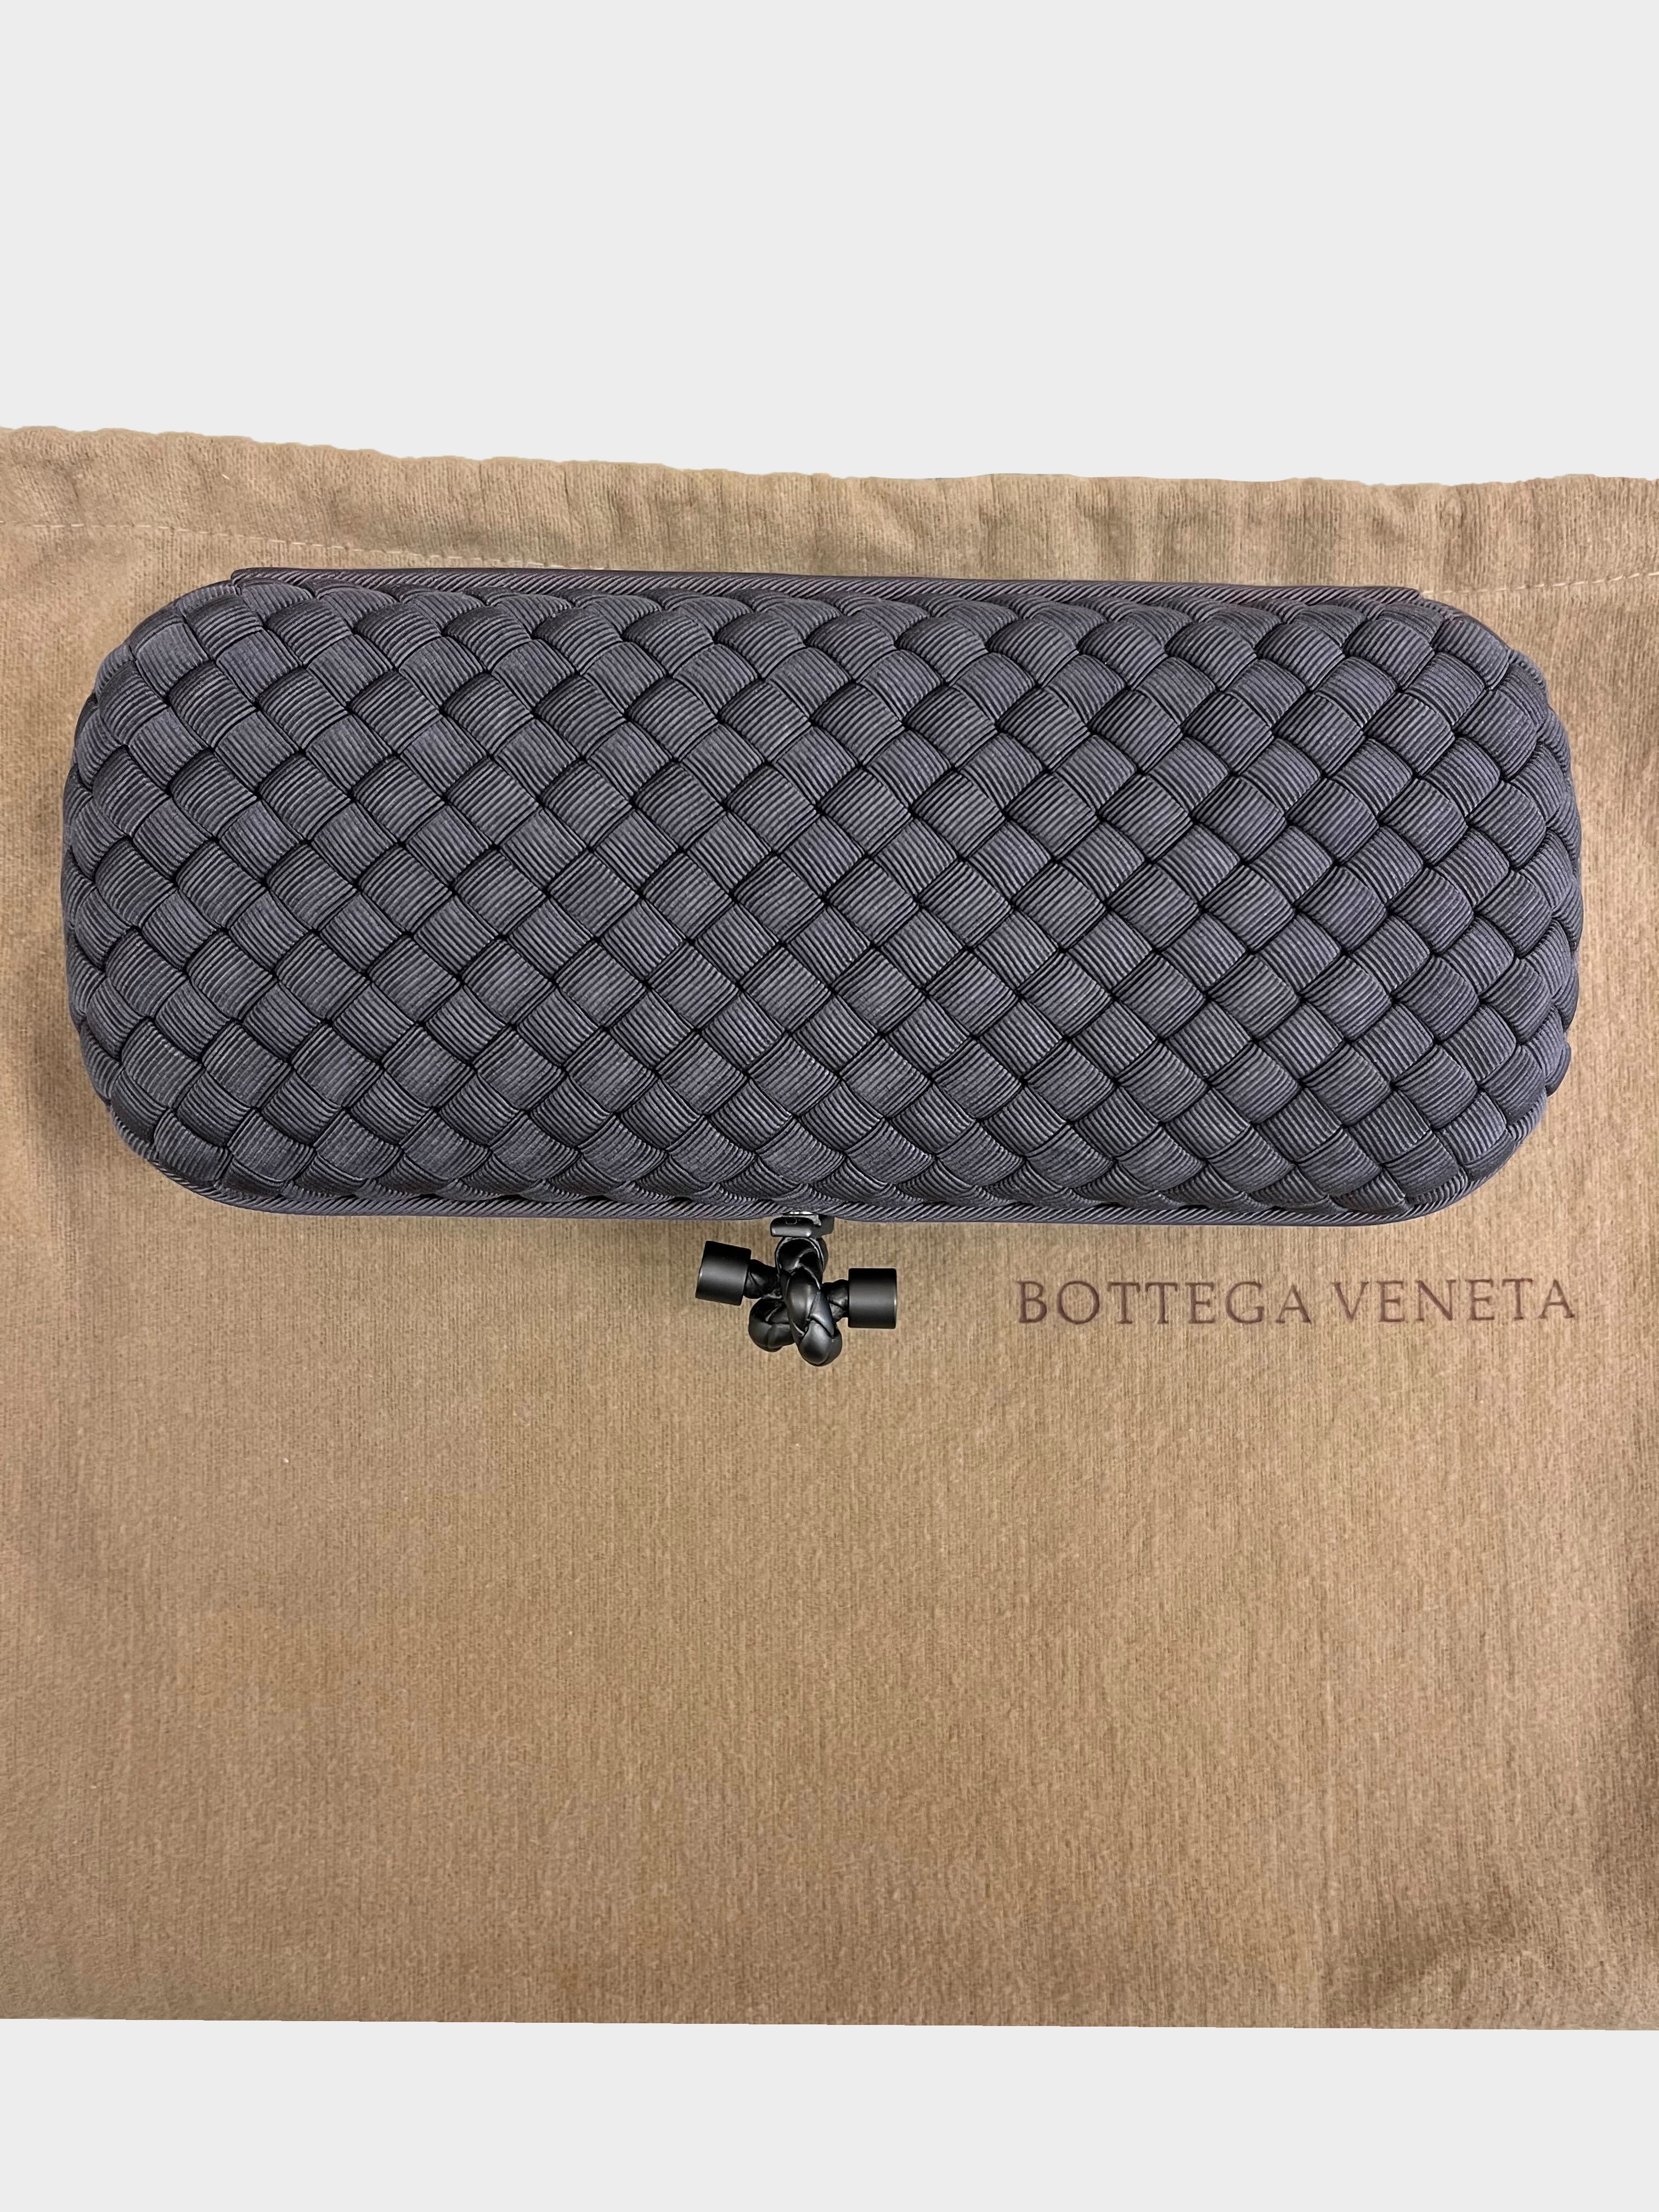 AW 2007 Bottega Veneta Runway Origami Knot Clutch - Limited